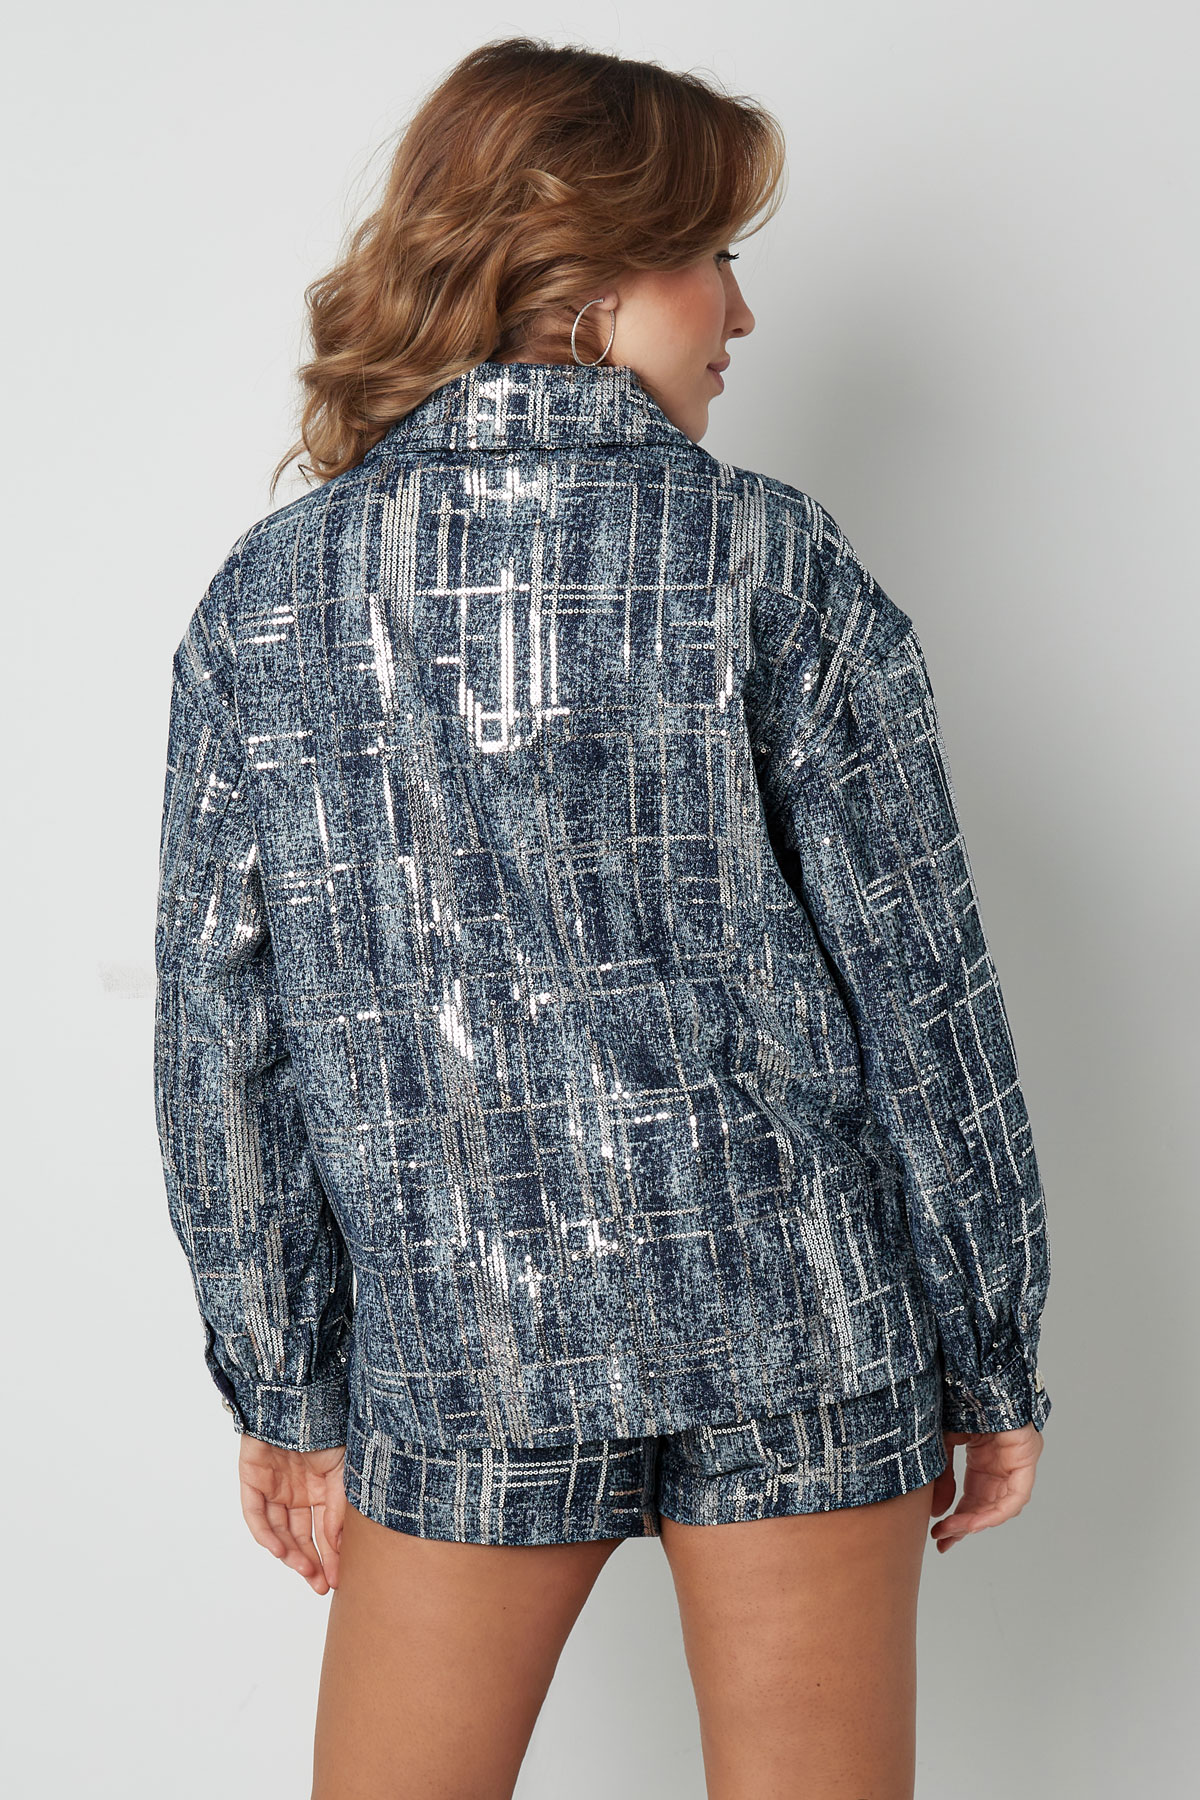 Jacket denim look with sequins - blue - L Picture11